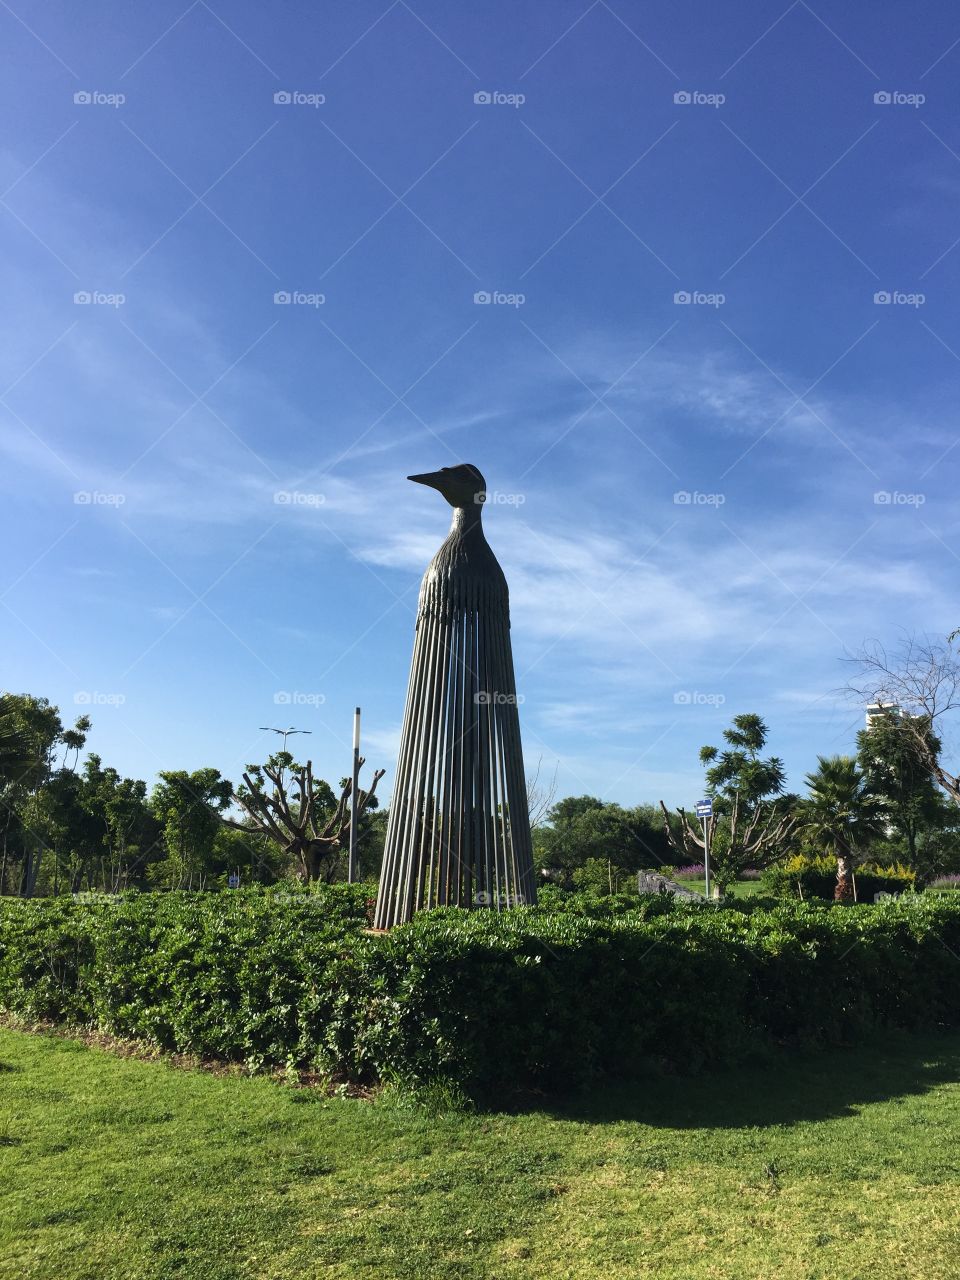 statue
Bird sculpture
Jaula de pájaro 